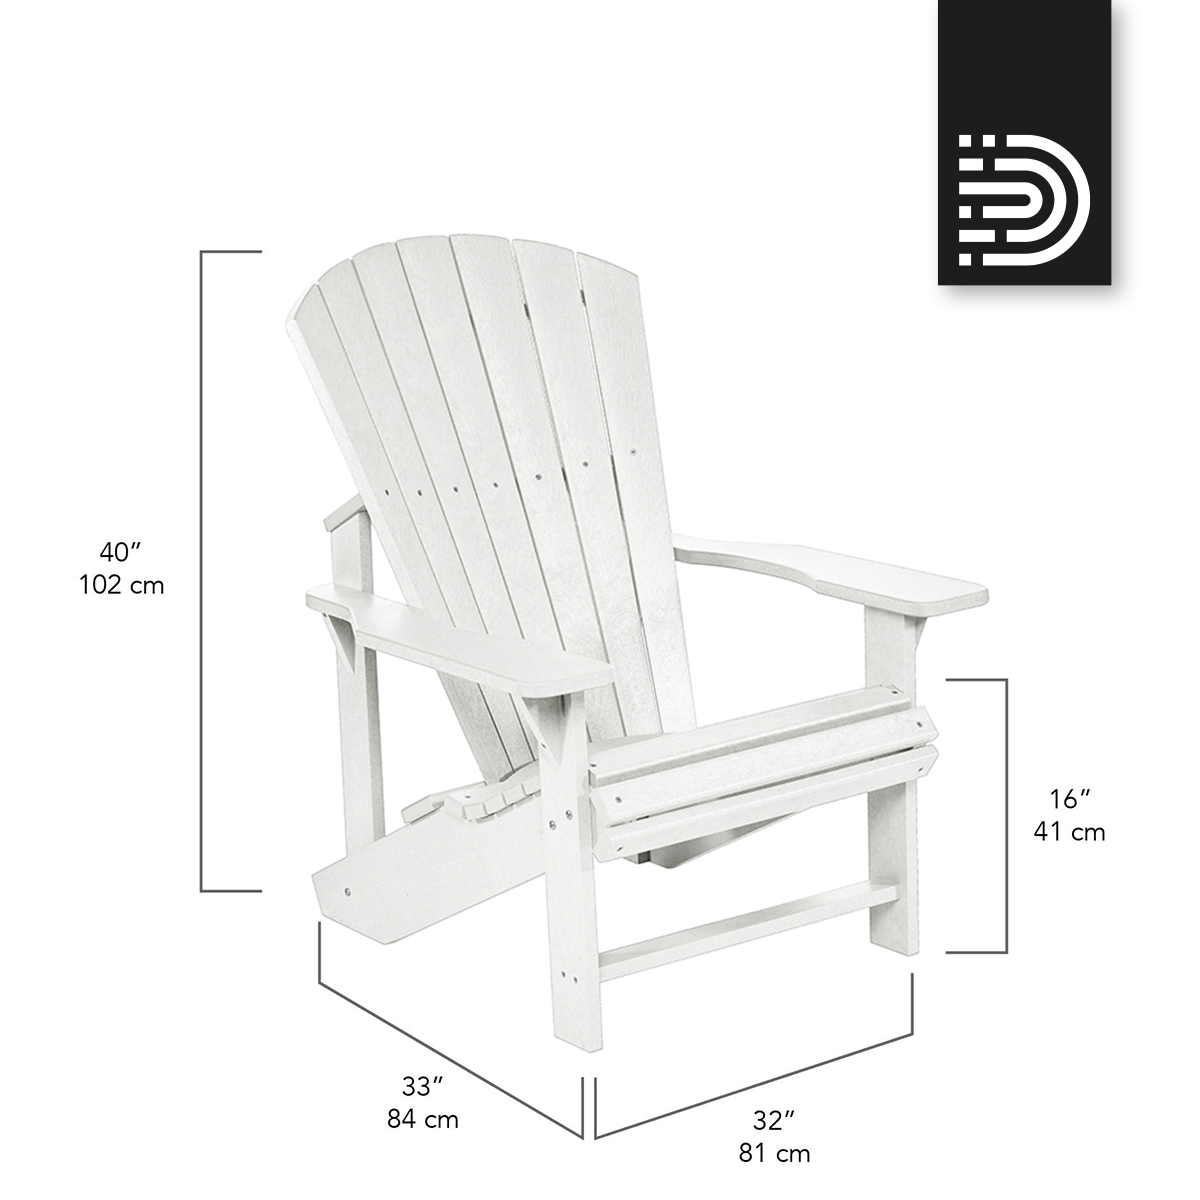  C01 Classic Adirondack Chair - white 02 AKTION 2er Set